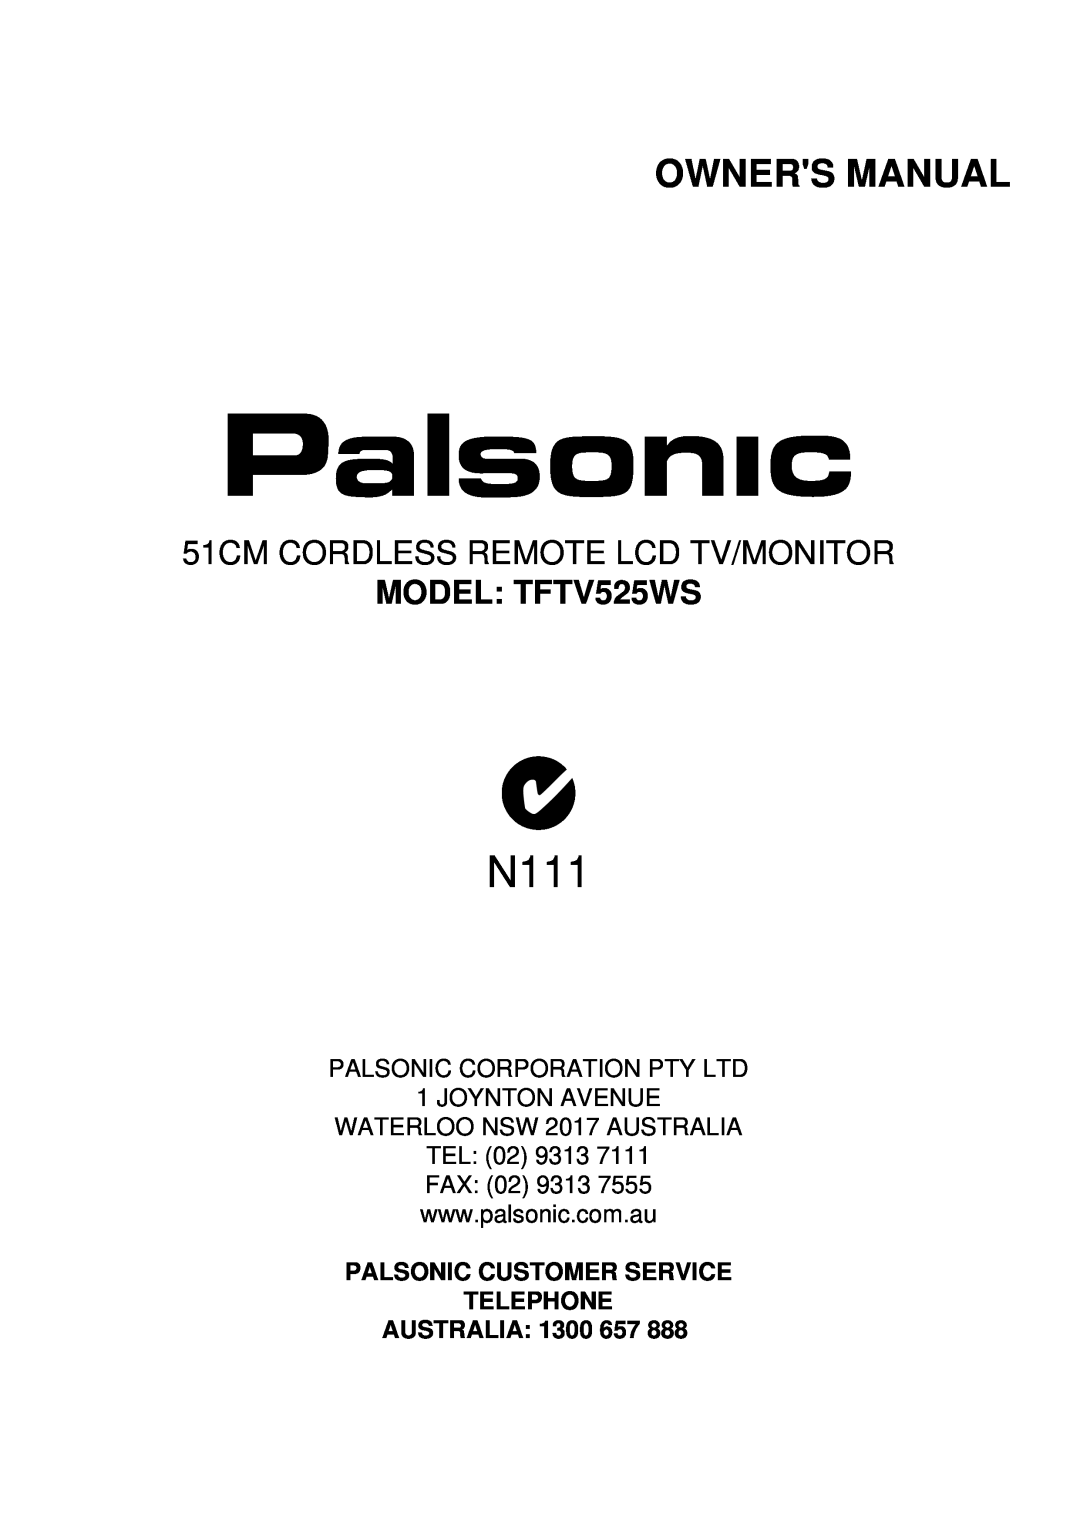 Palsonic owner manual MODEL TFTV525WS, N111, 51CM CORDLESS REMOTE LCD TV/MONITOR 